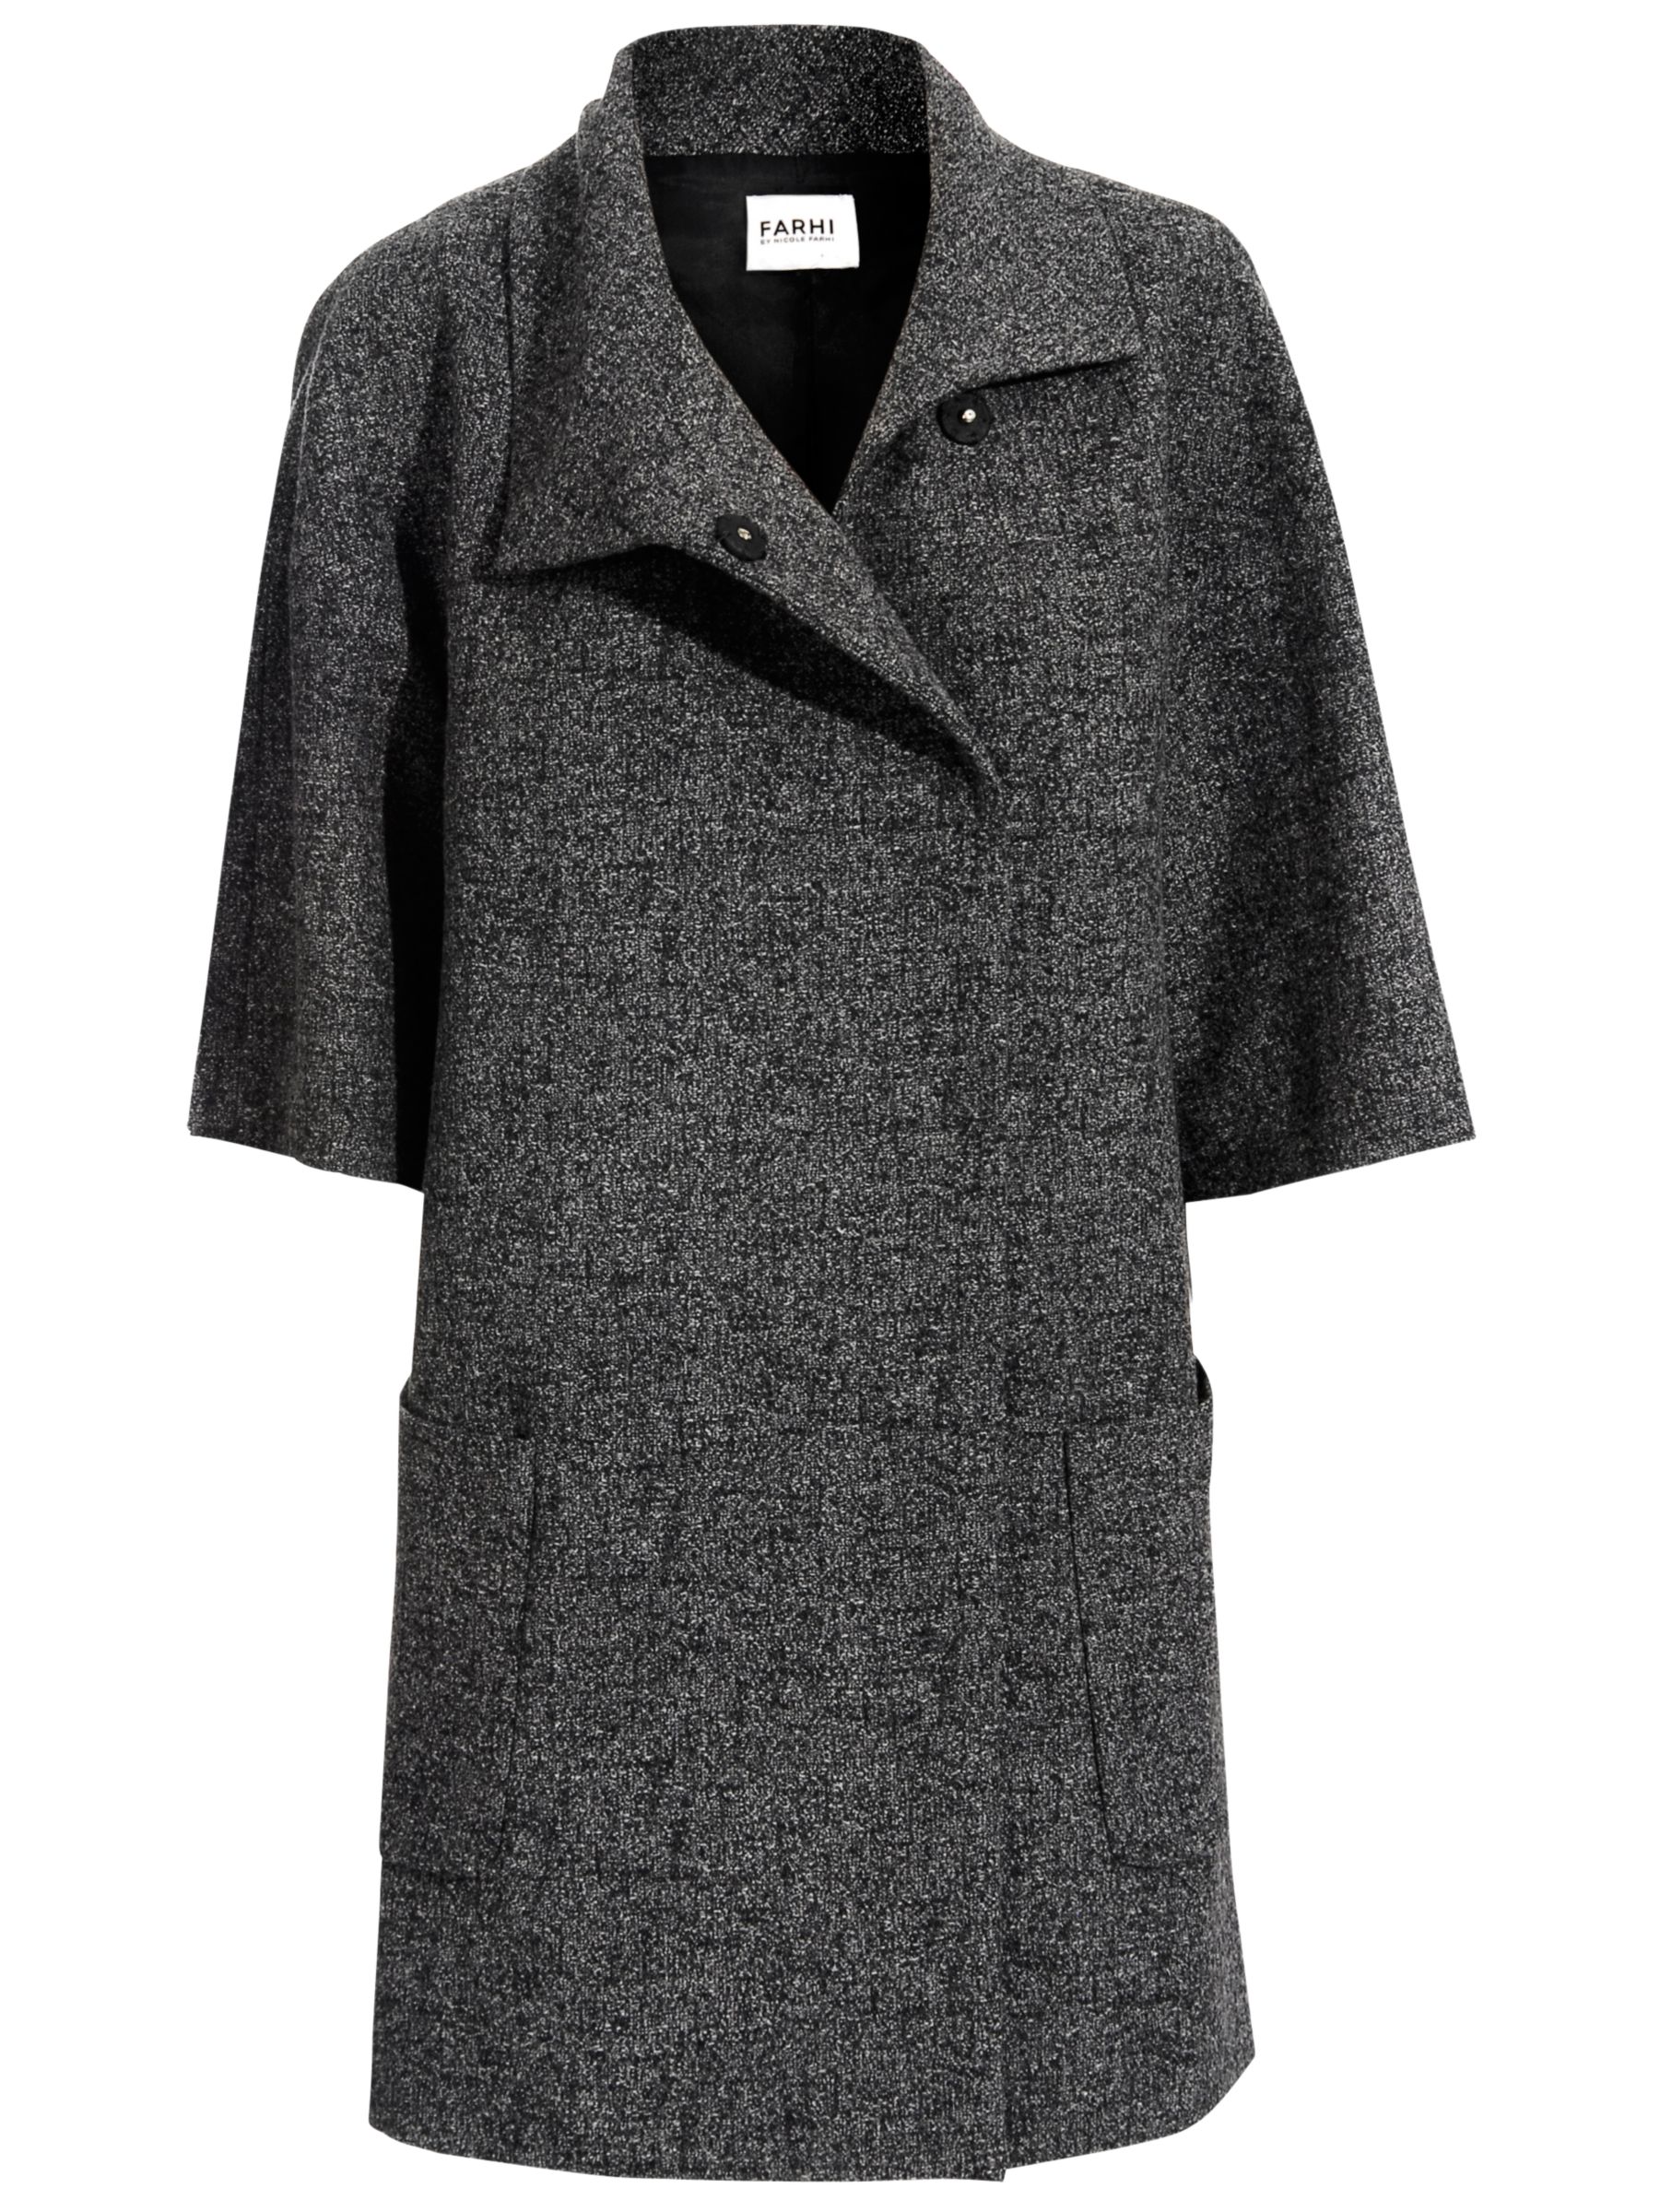 Farhi by Nicole Farhi Half Sleeve Tweed Coat, Slate at John Lewis